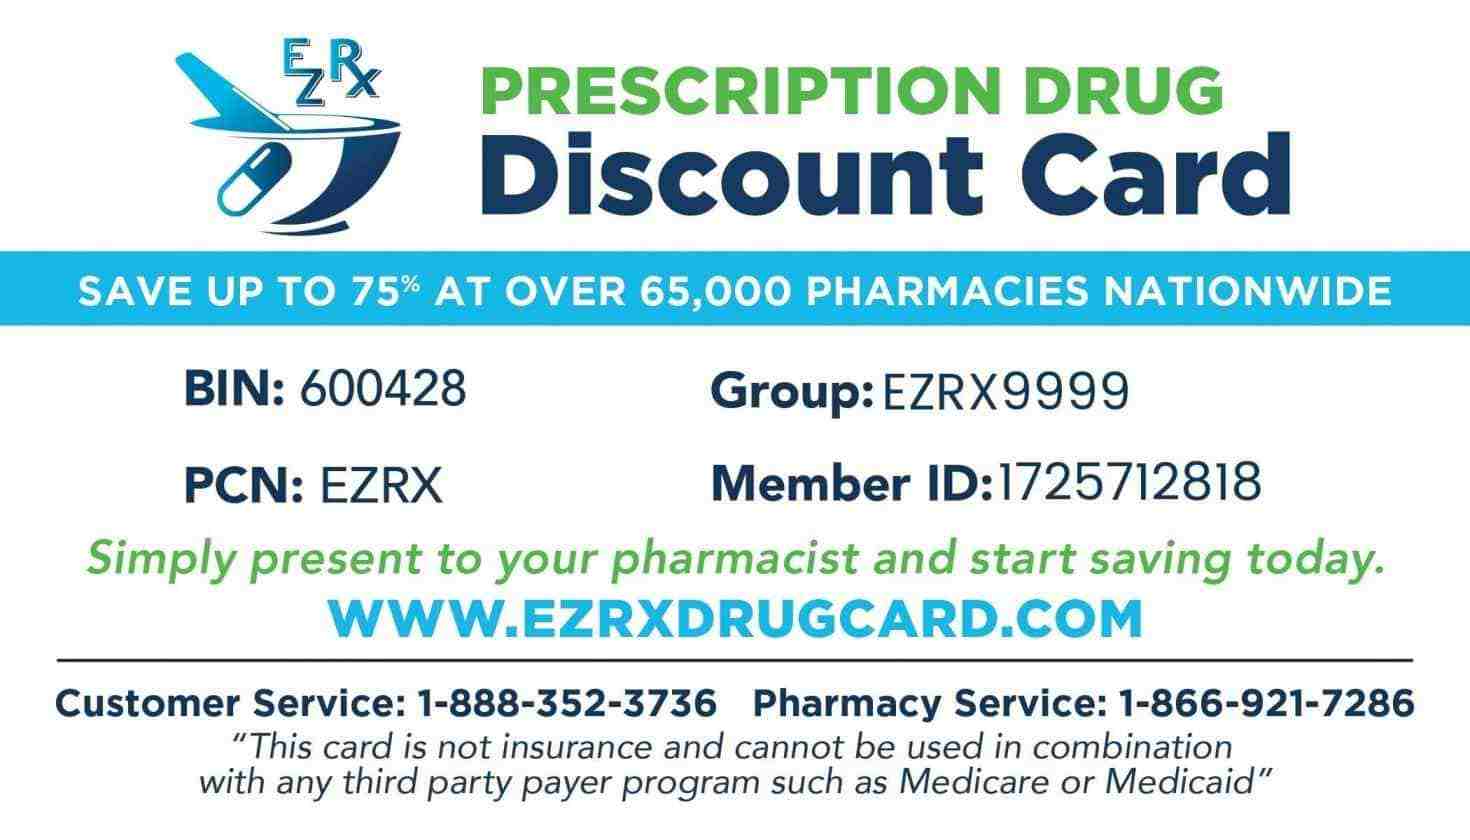 Prescription Drug Discount Card